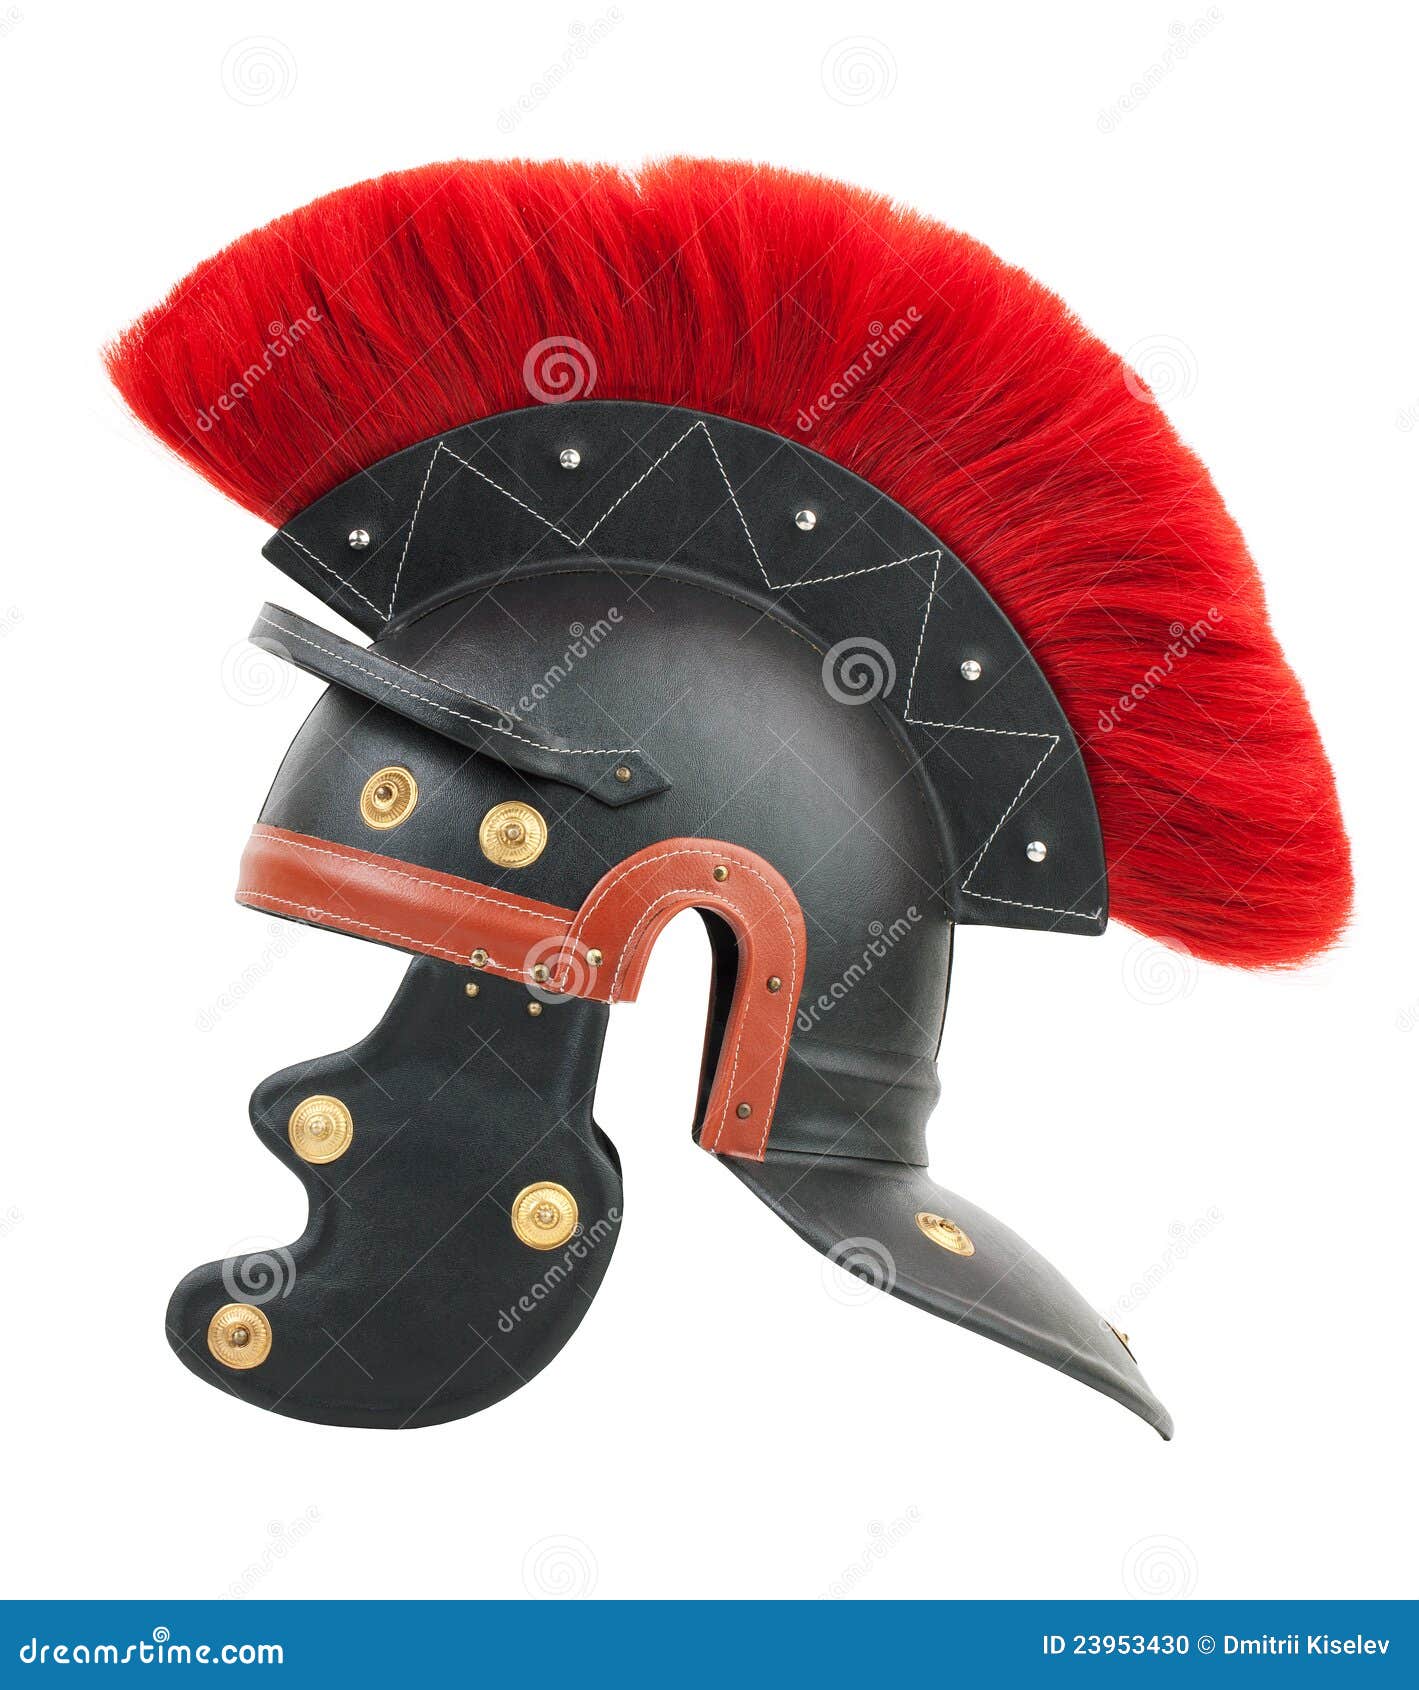 early roman centurion helmet